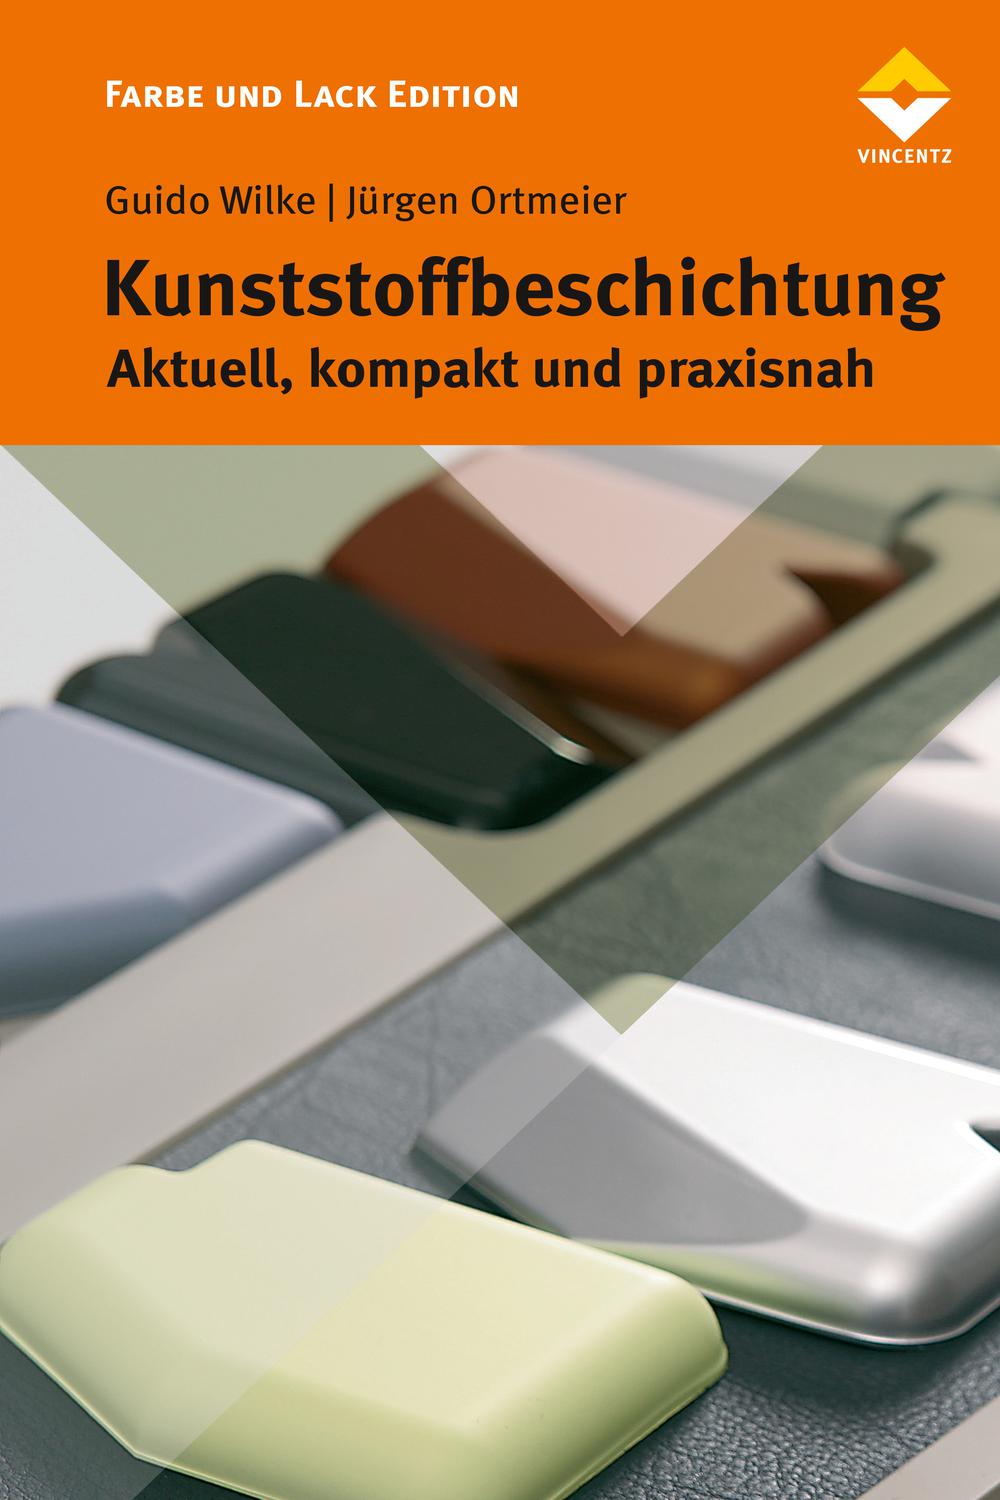 Kunststoffbeschichtung - Guido Wilke, Jürgen Ortmeier